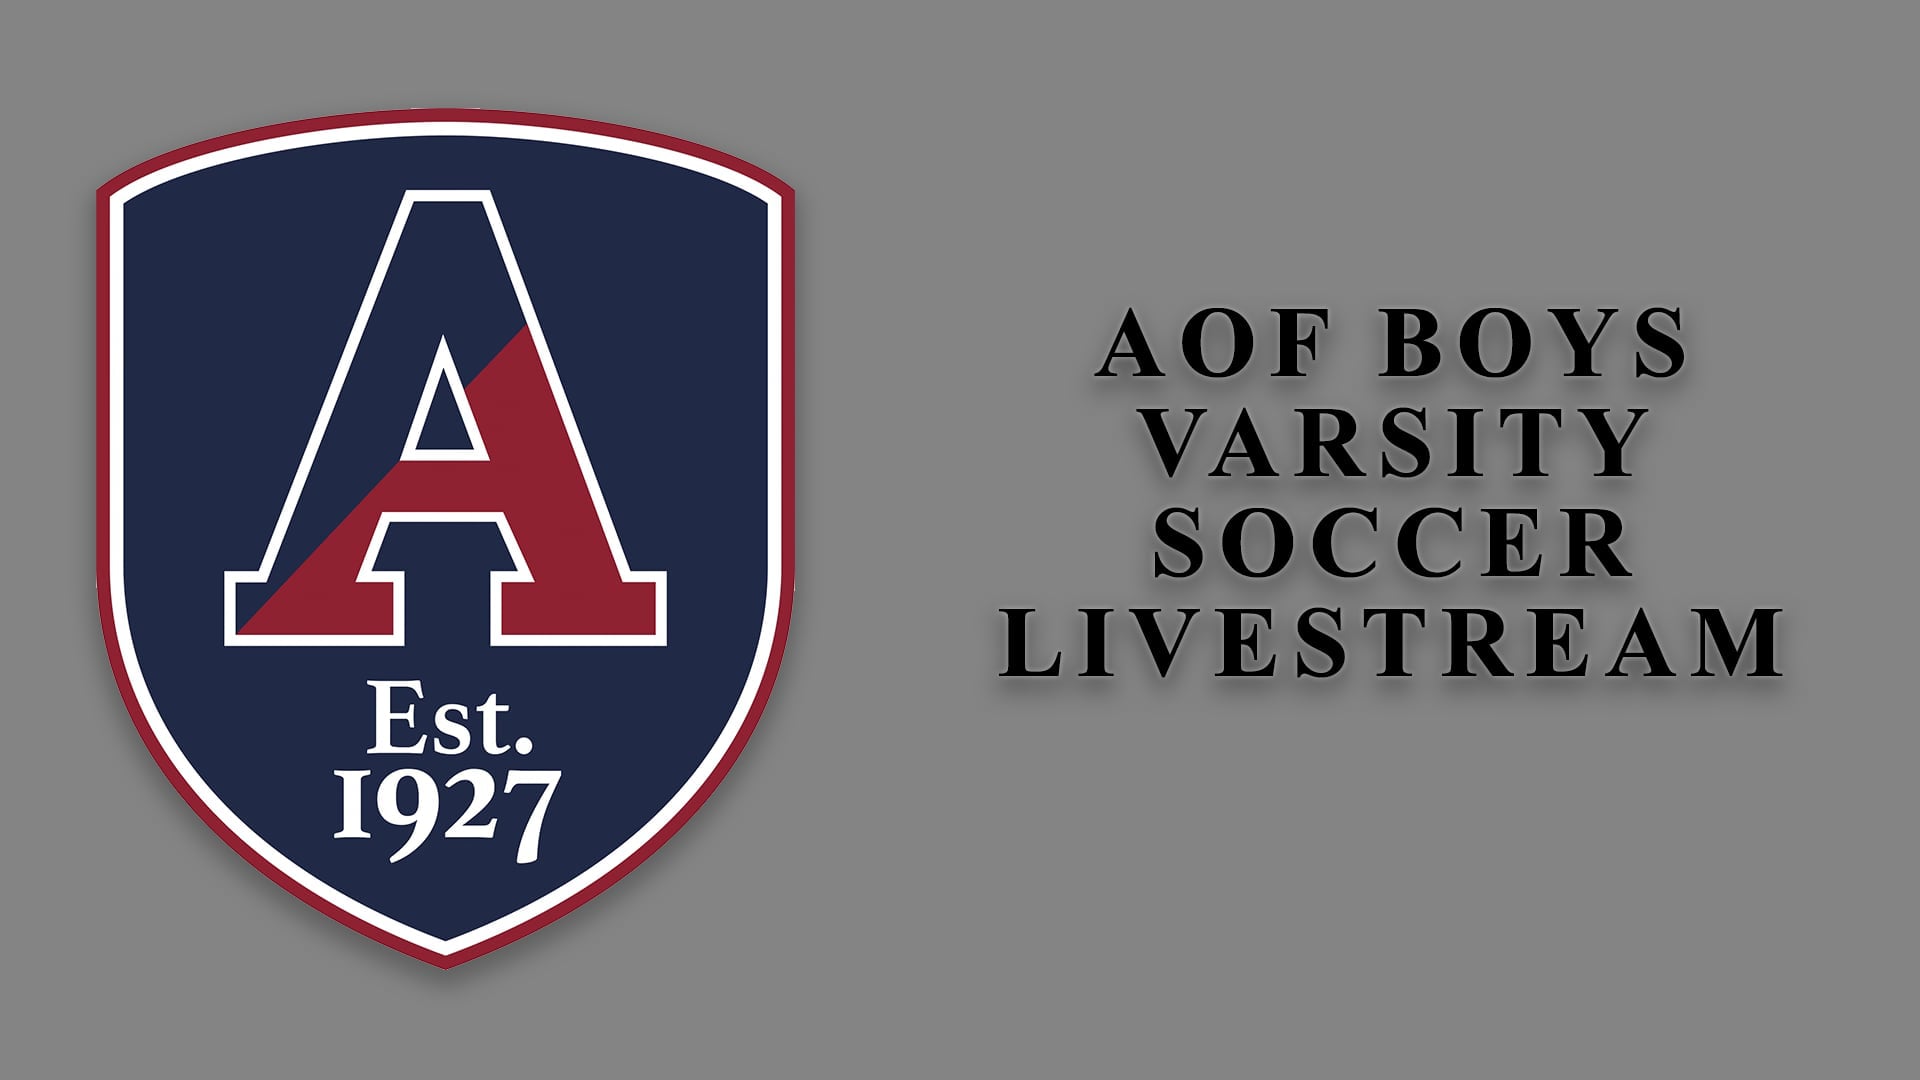 AOF Varsity Soccer Livestream on Vimeo